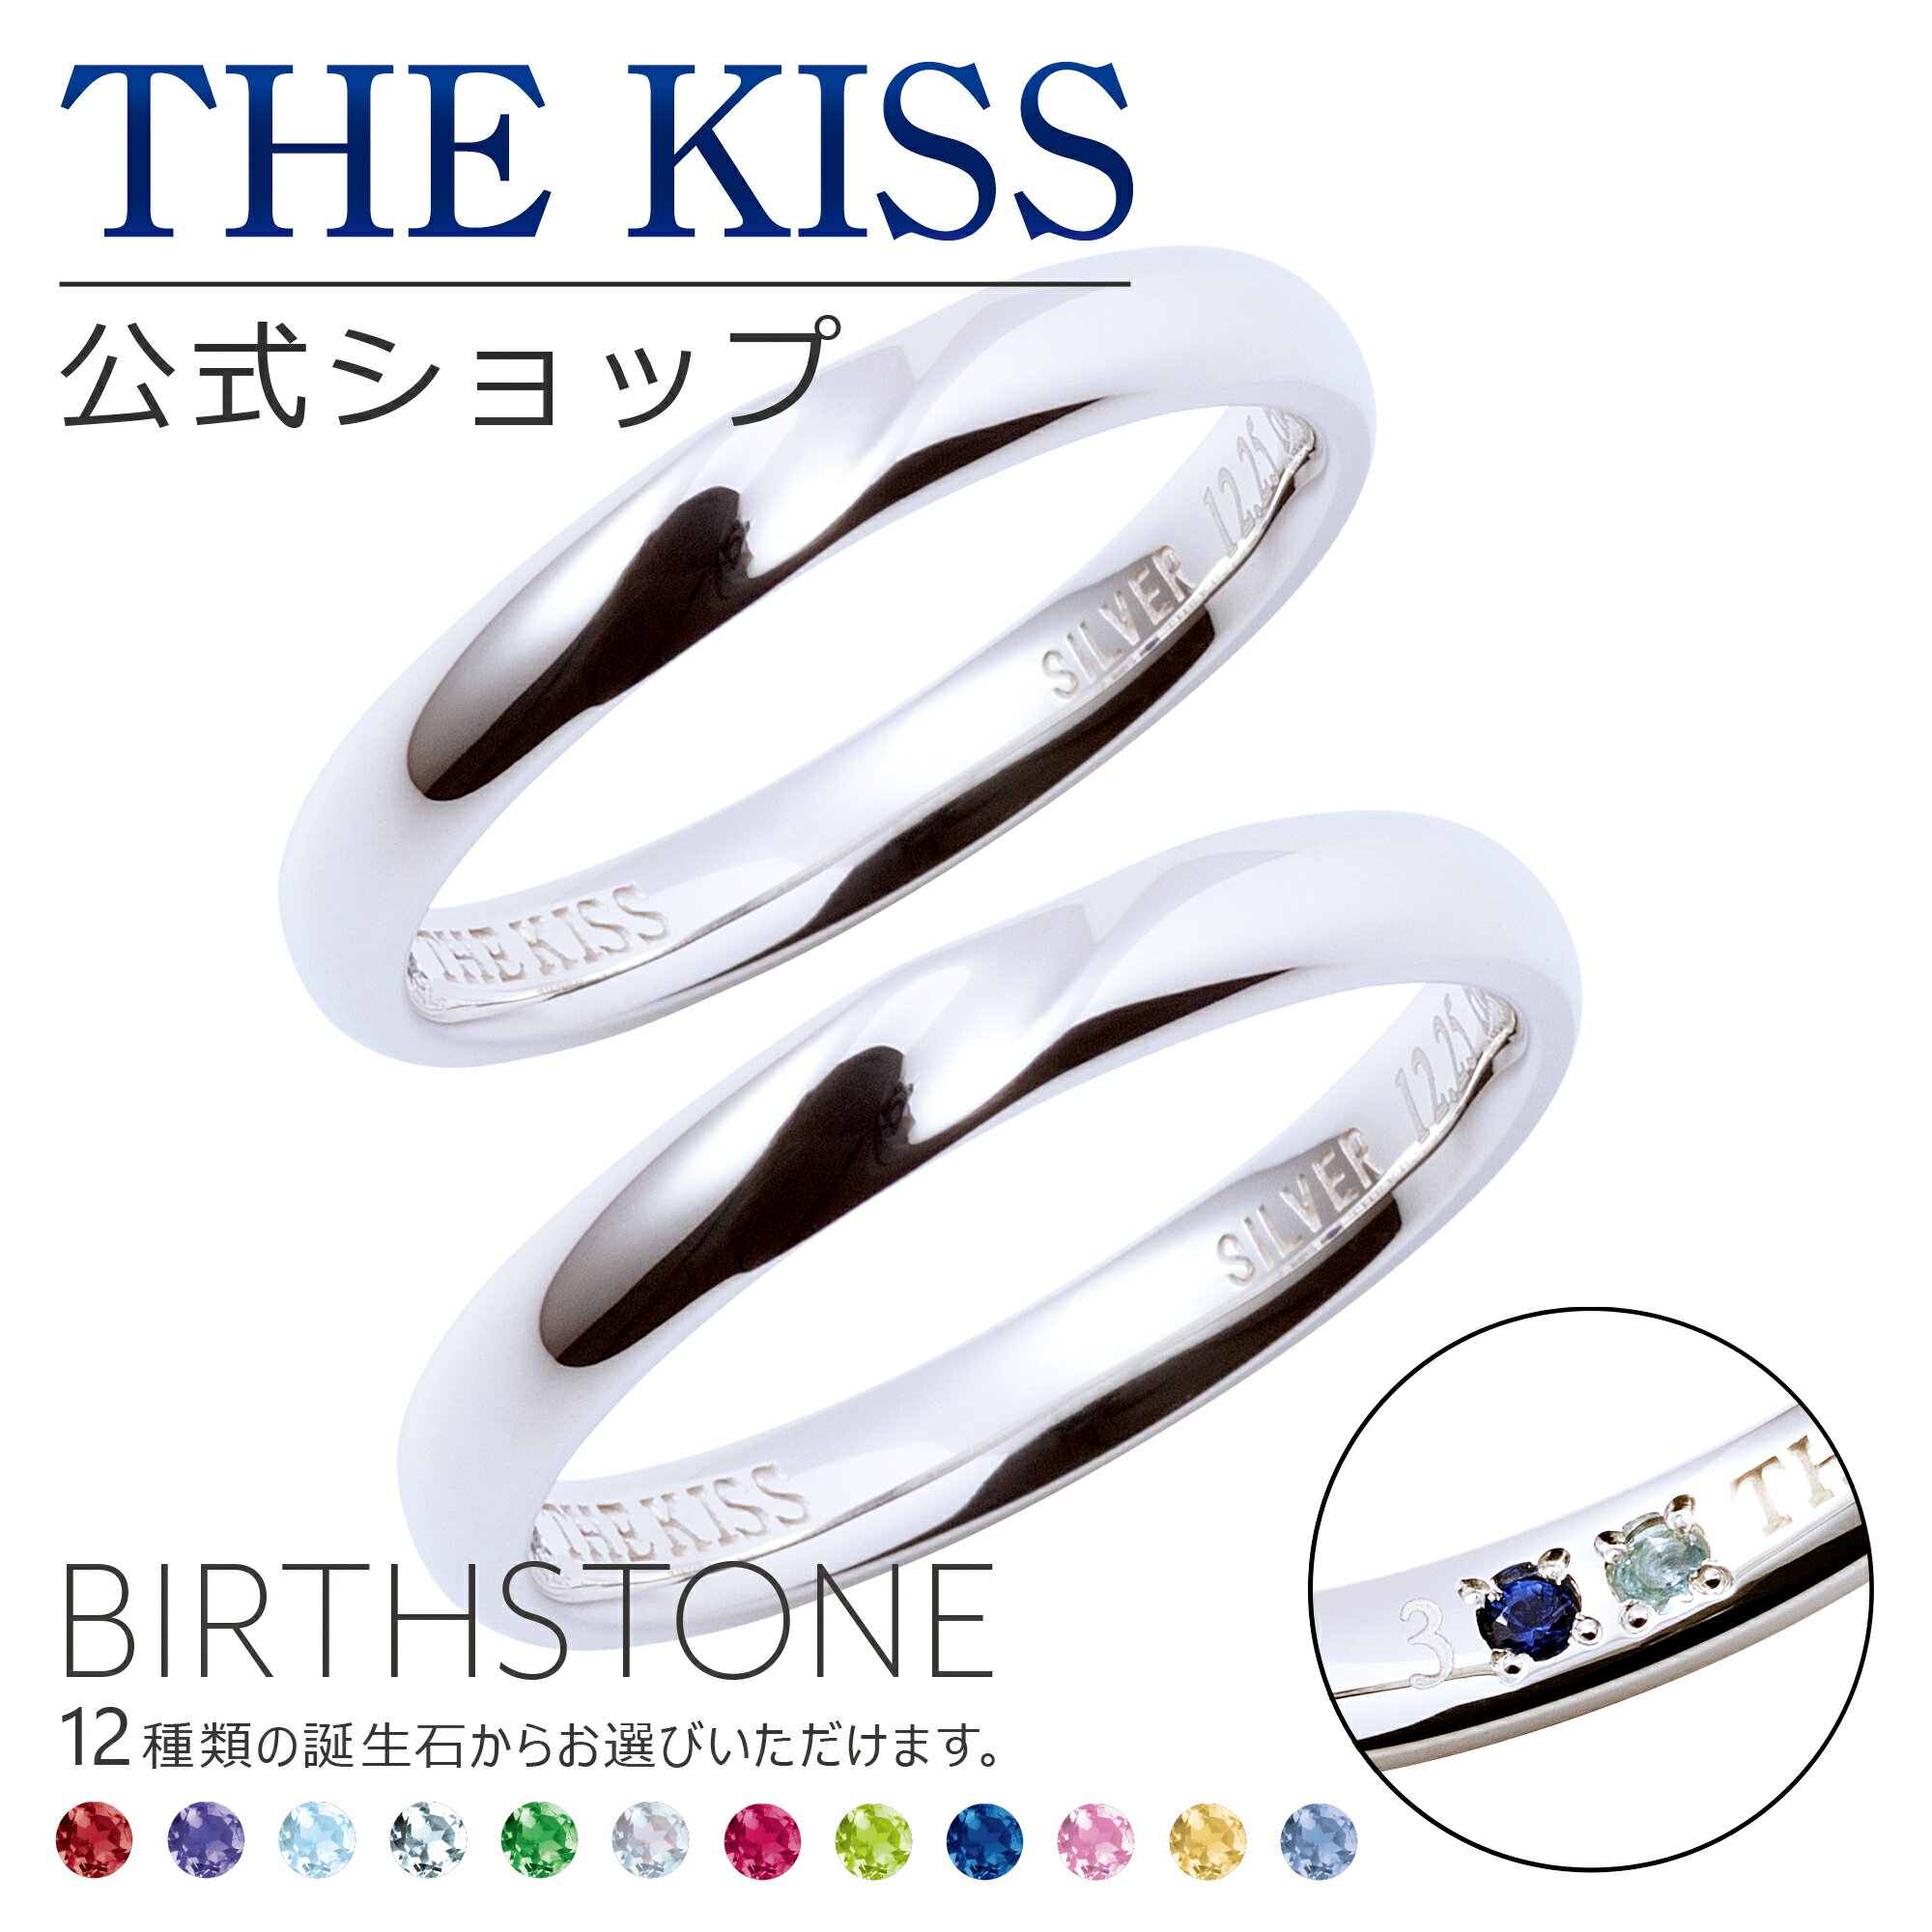 THE KISS 公式ショップ セミオーダー シルバー ペアリング オーダーメイド 偶数 セット ペアアクセサリー カップル 人気 ブランド THEKISS 指輪 誕生石 バースデーストーン 男性 女性 2個セット 母の日